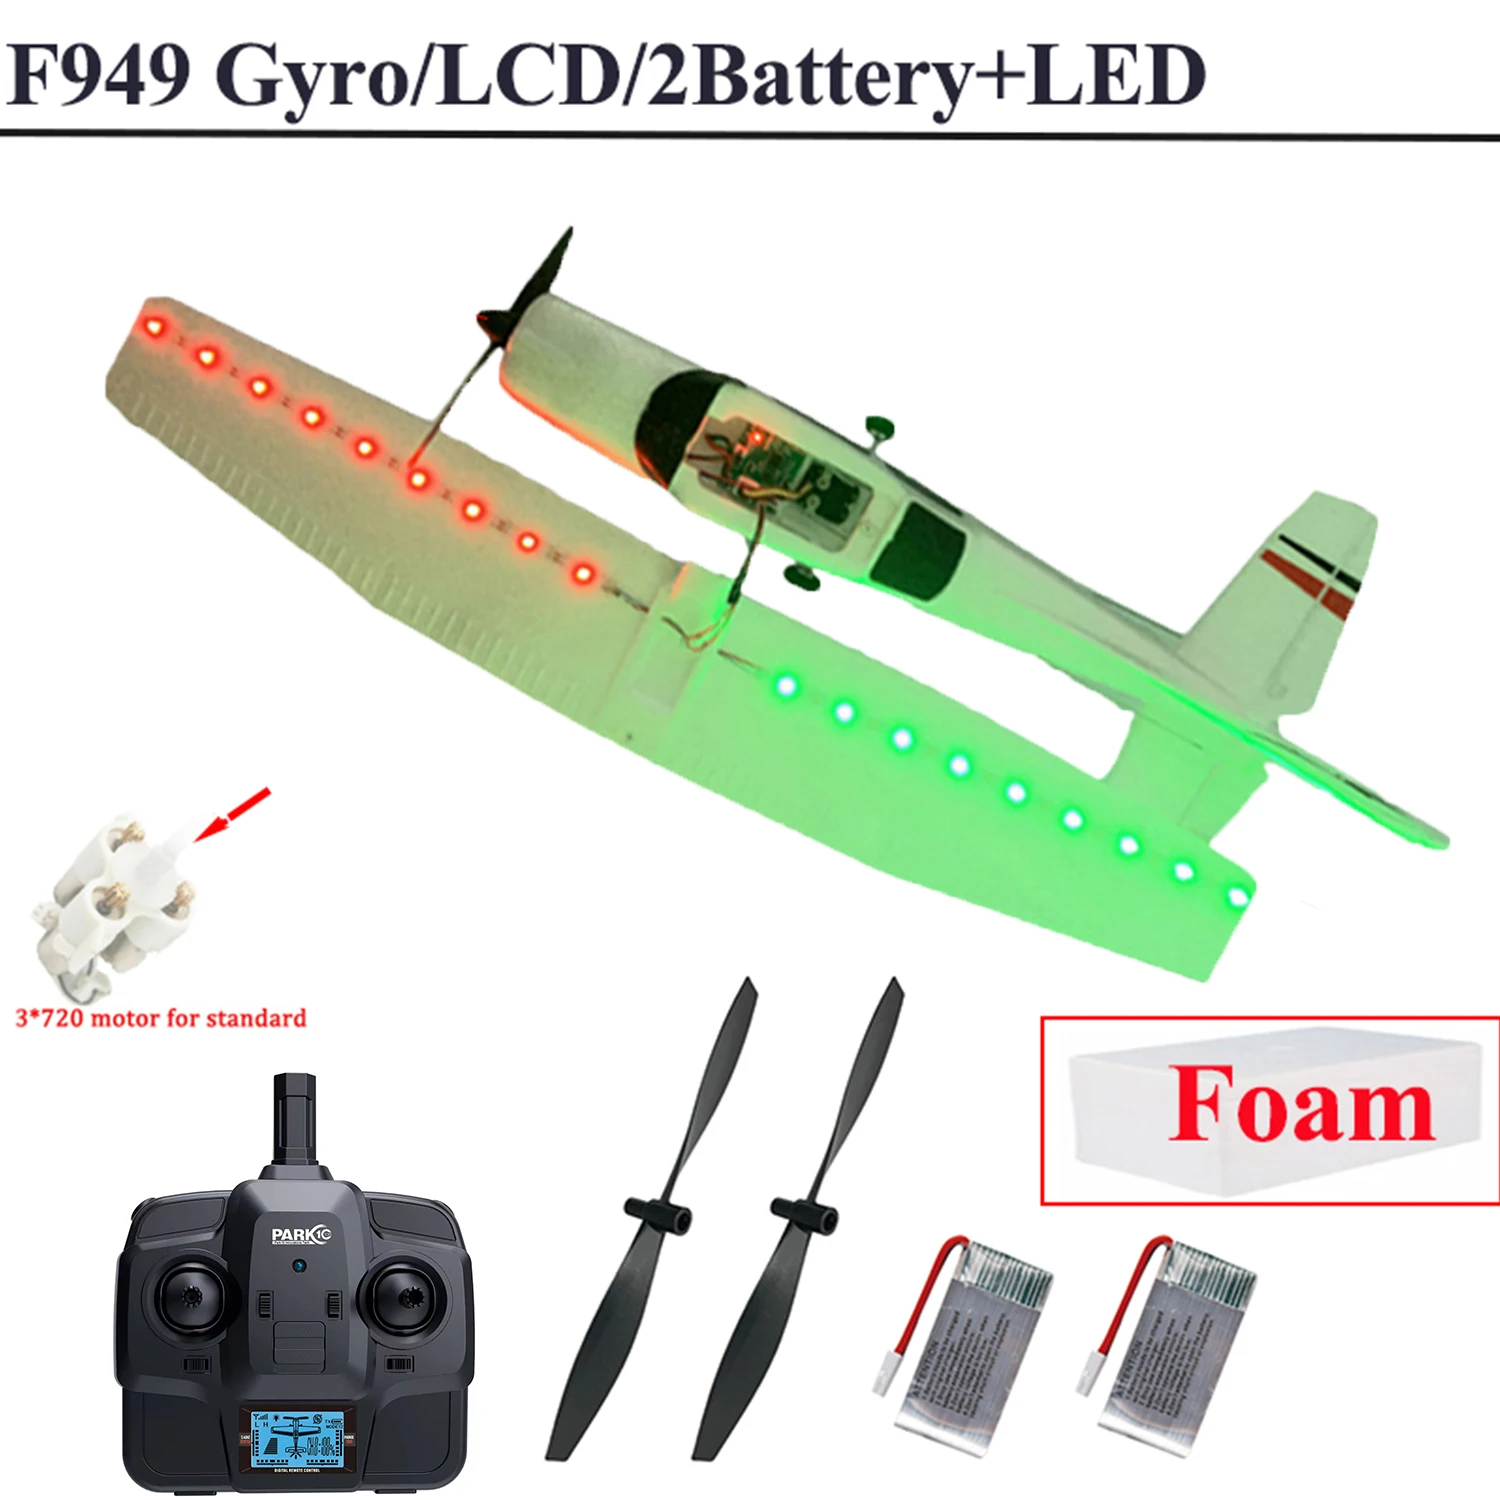 LCD Gyro 2B LED Foam